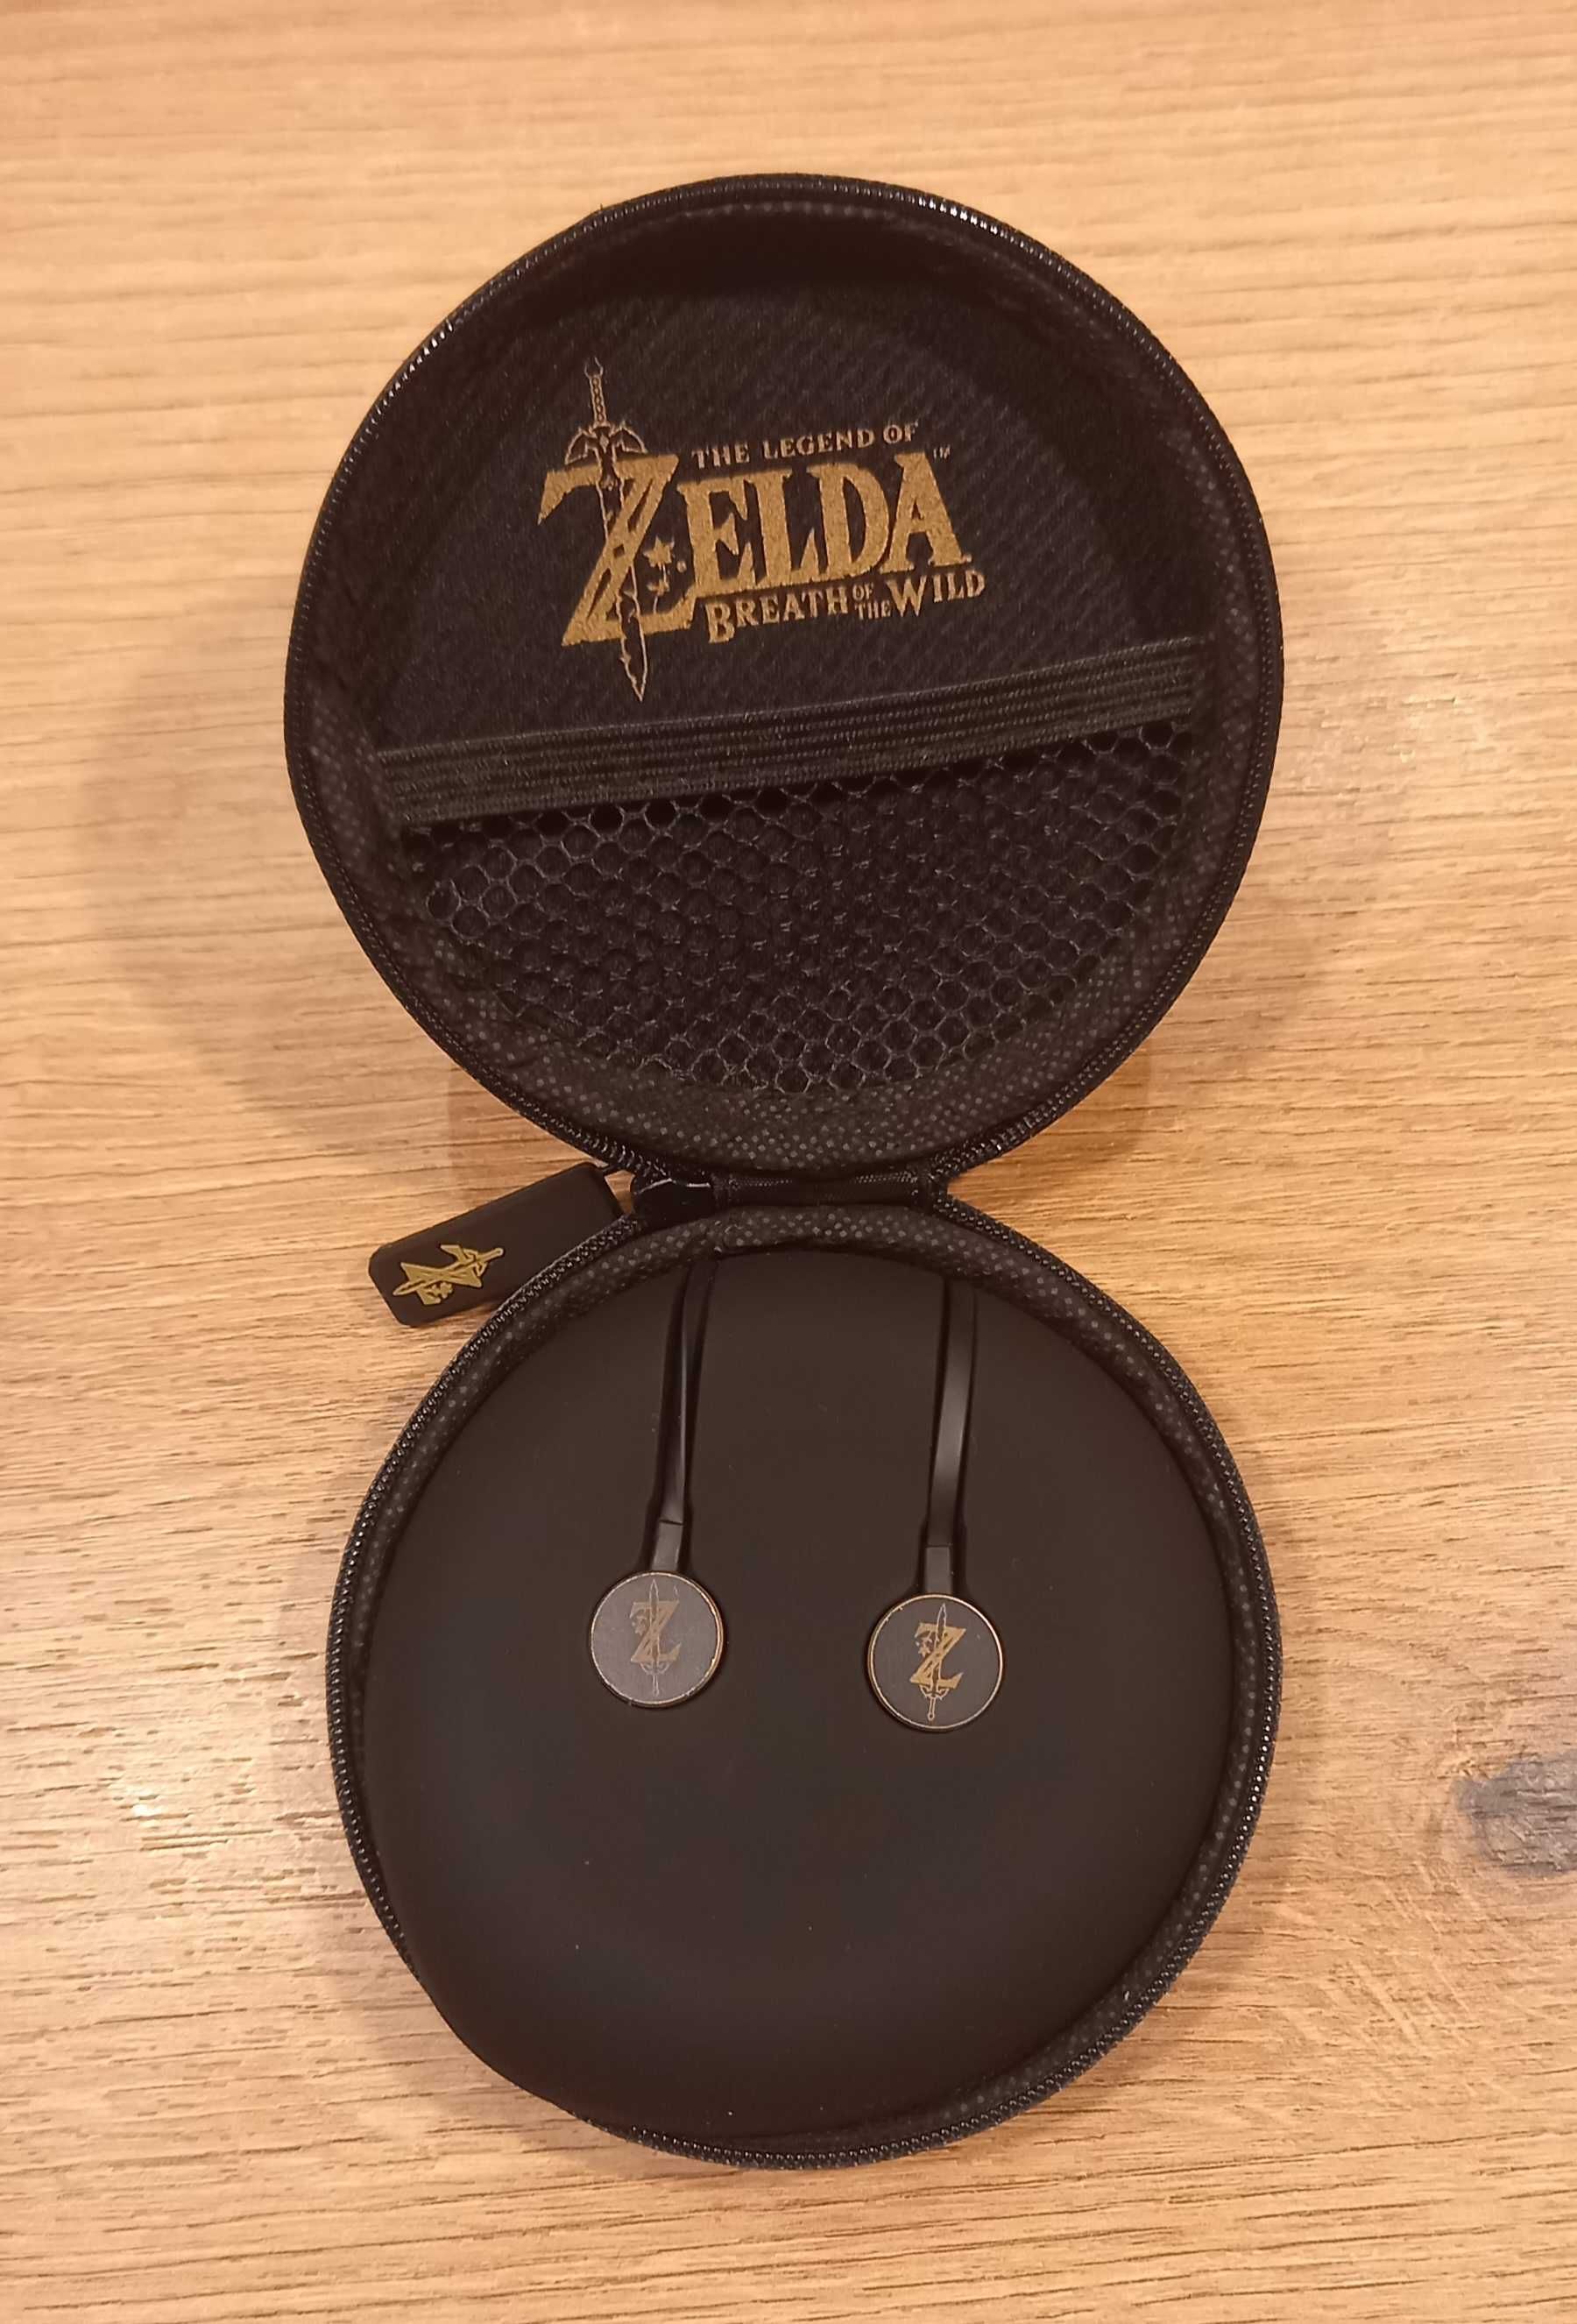 Sluchawki douszne Zelda